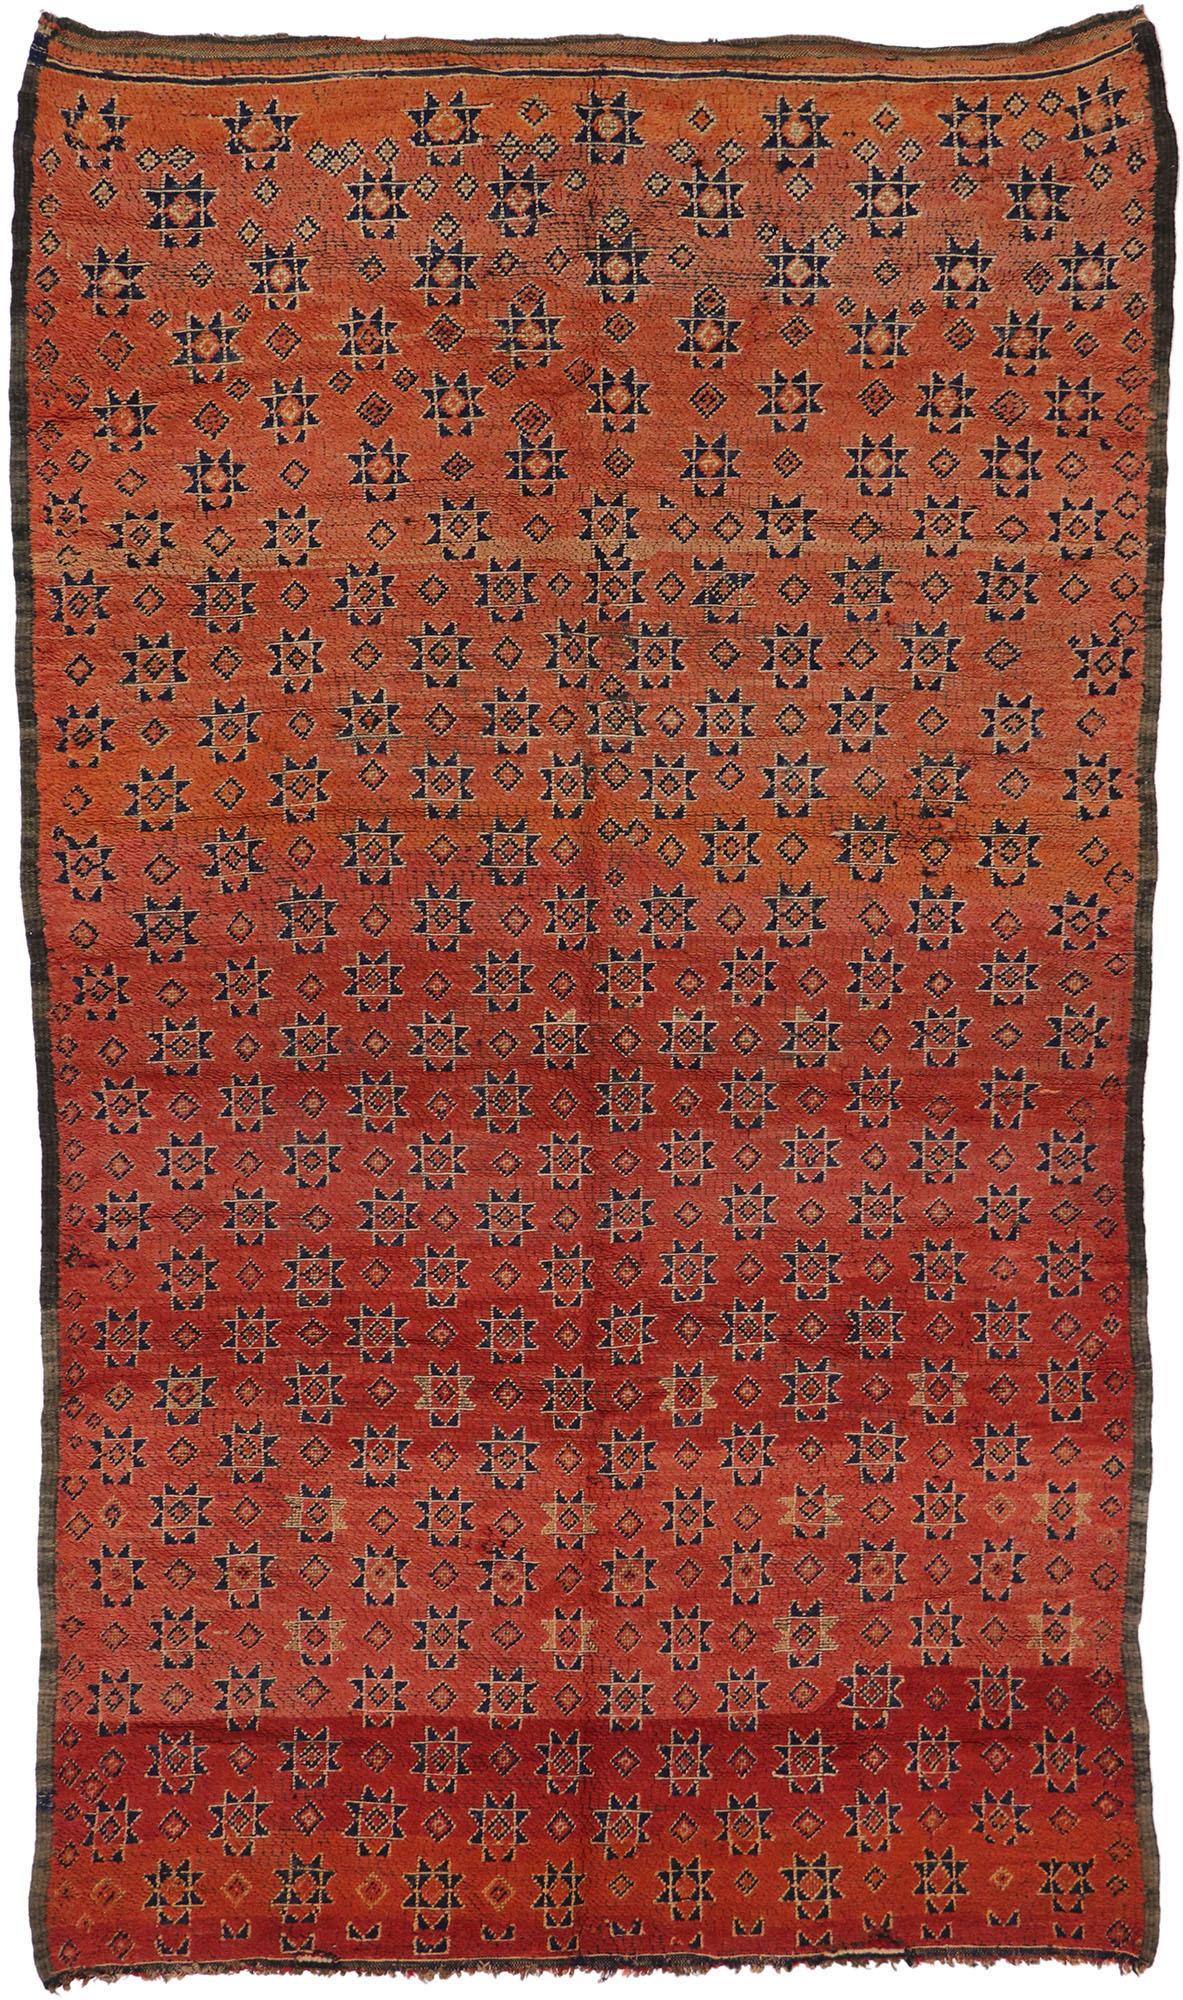 Vintage Beni MGuild Moroccan Rug, Midcentury Modern Meets Tribal Enchantment For Sale 3